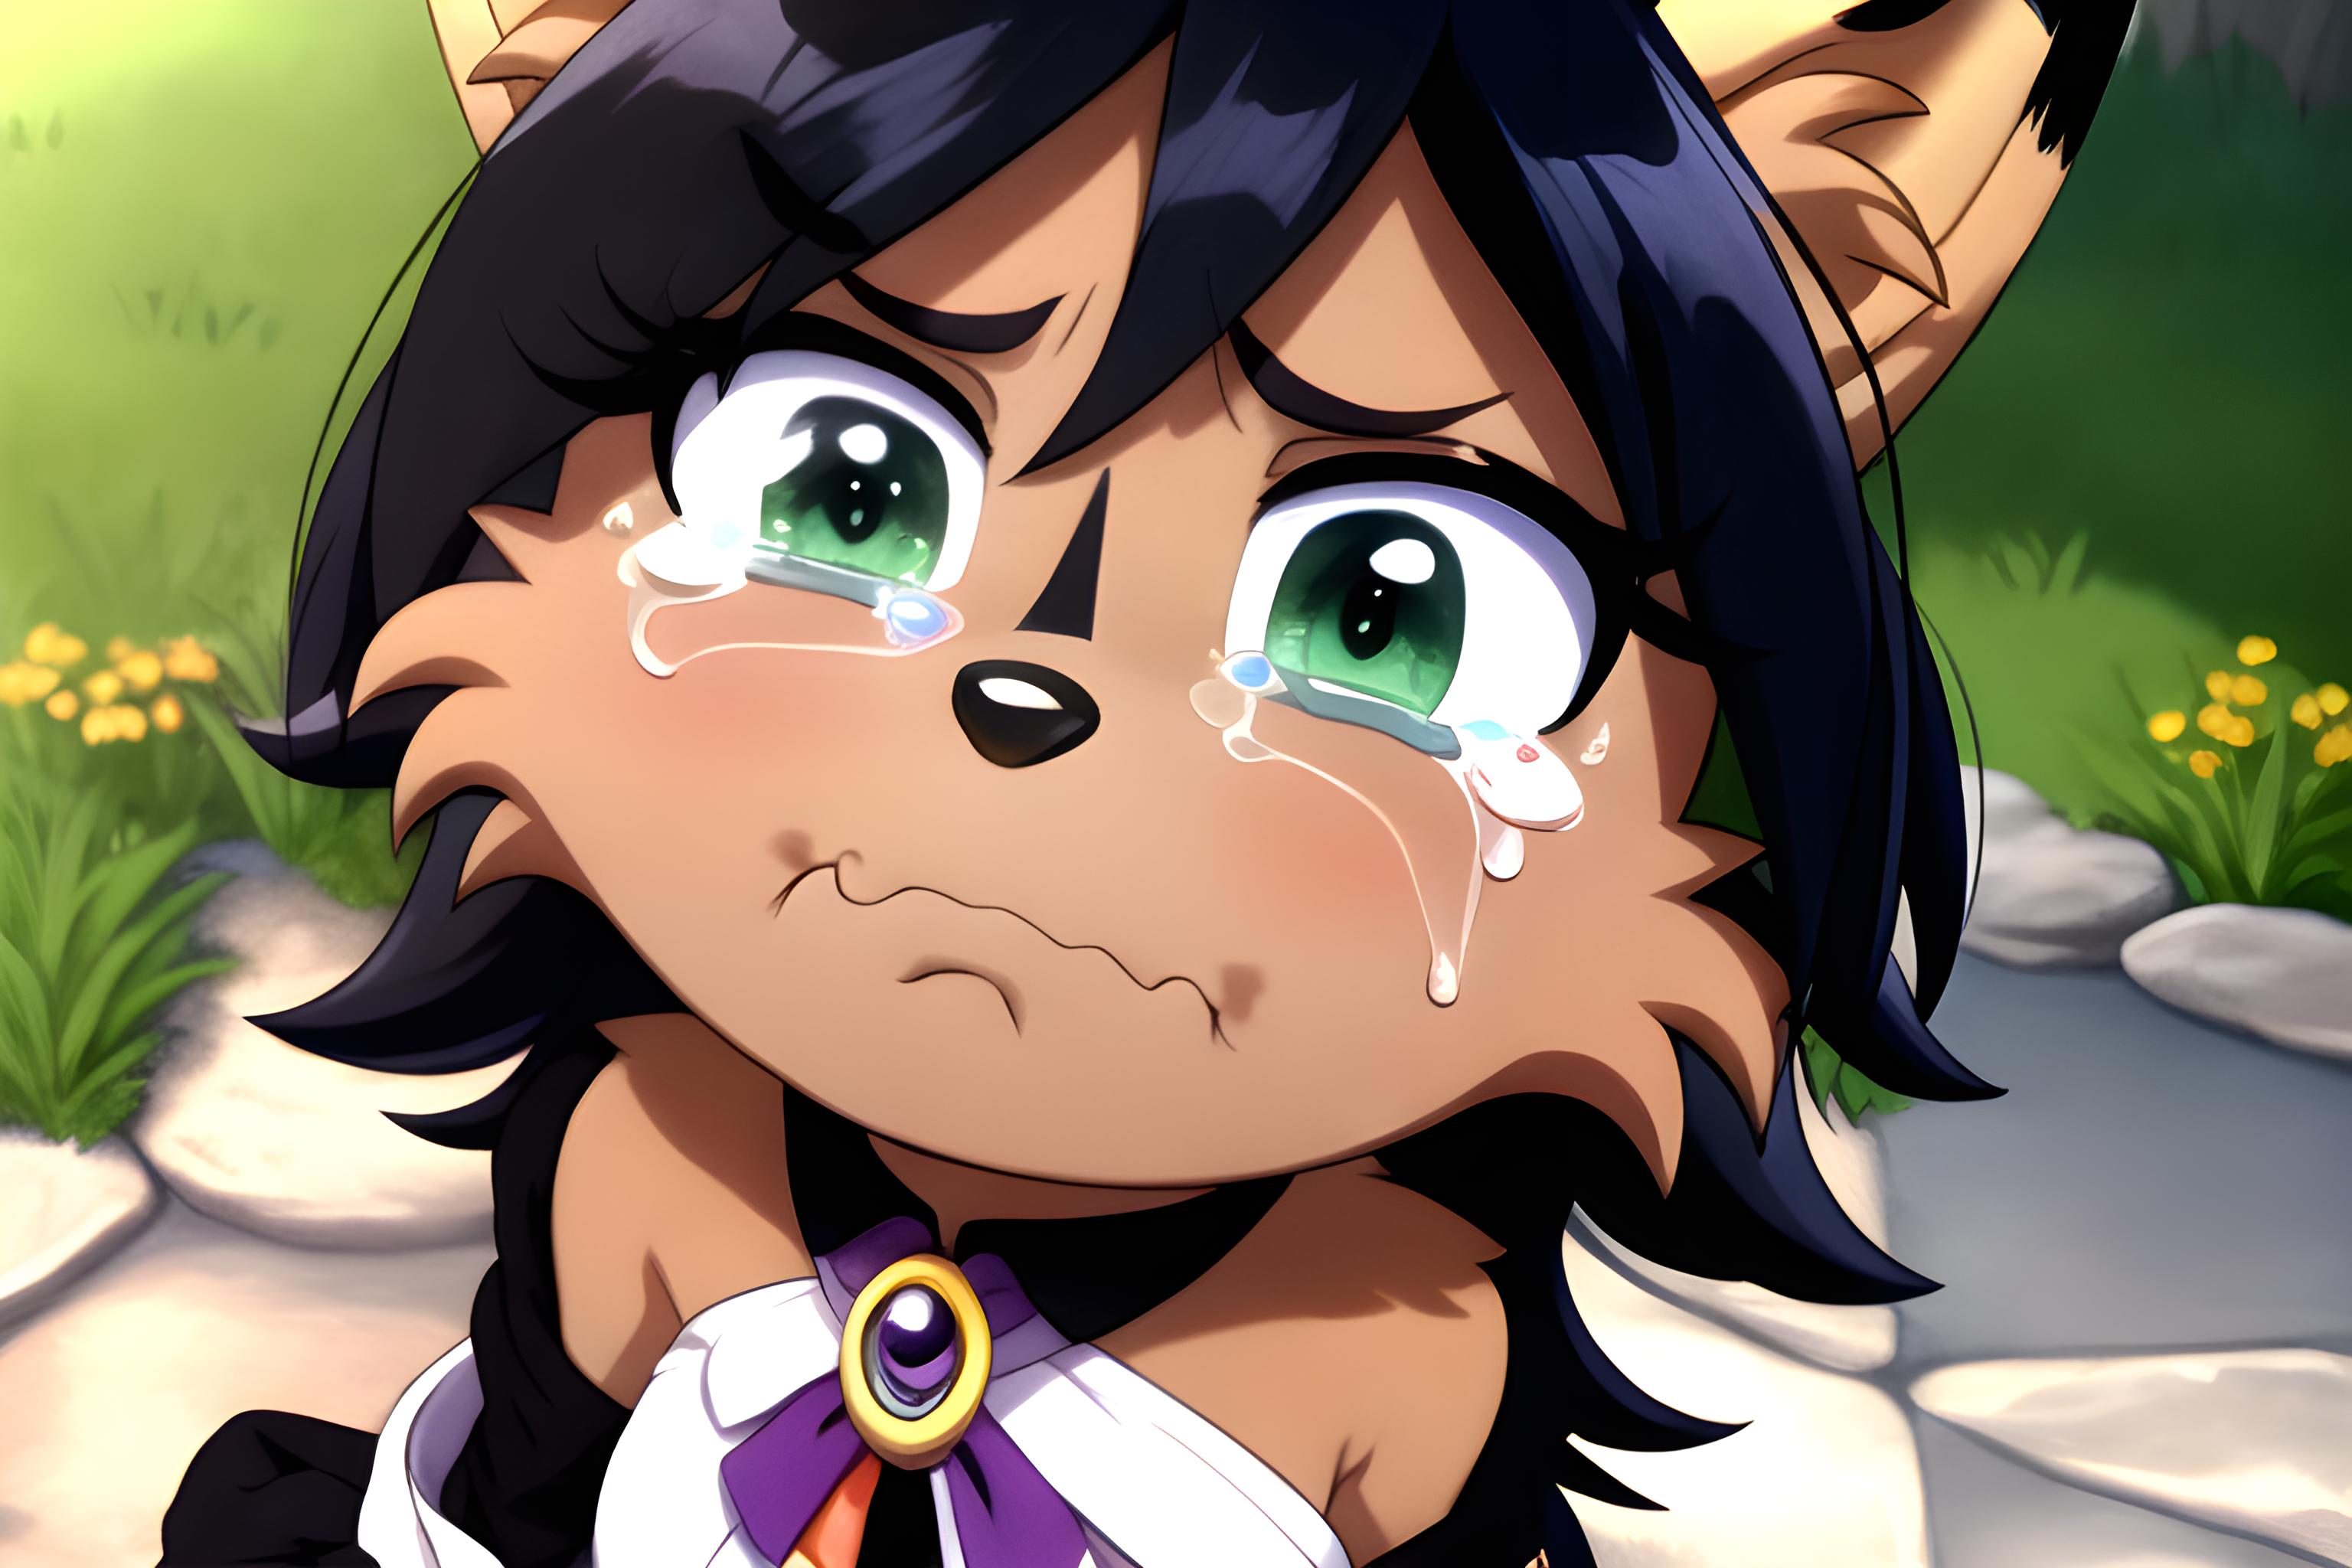 Aqua crying/begging anime meme | Kono Subarashii Sekai ni Bakuen wo! | KonoSuba image by Vinylcrack